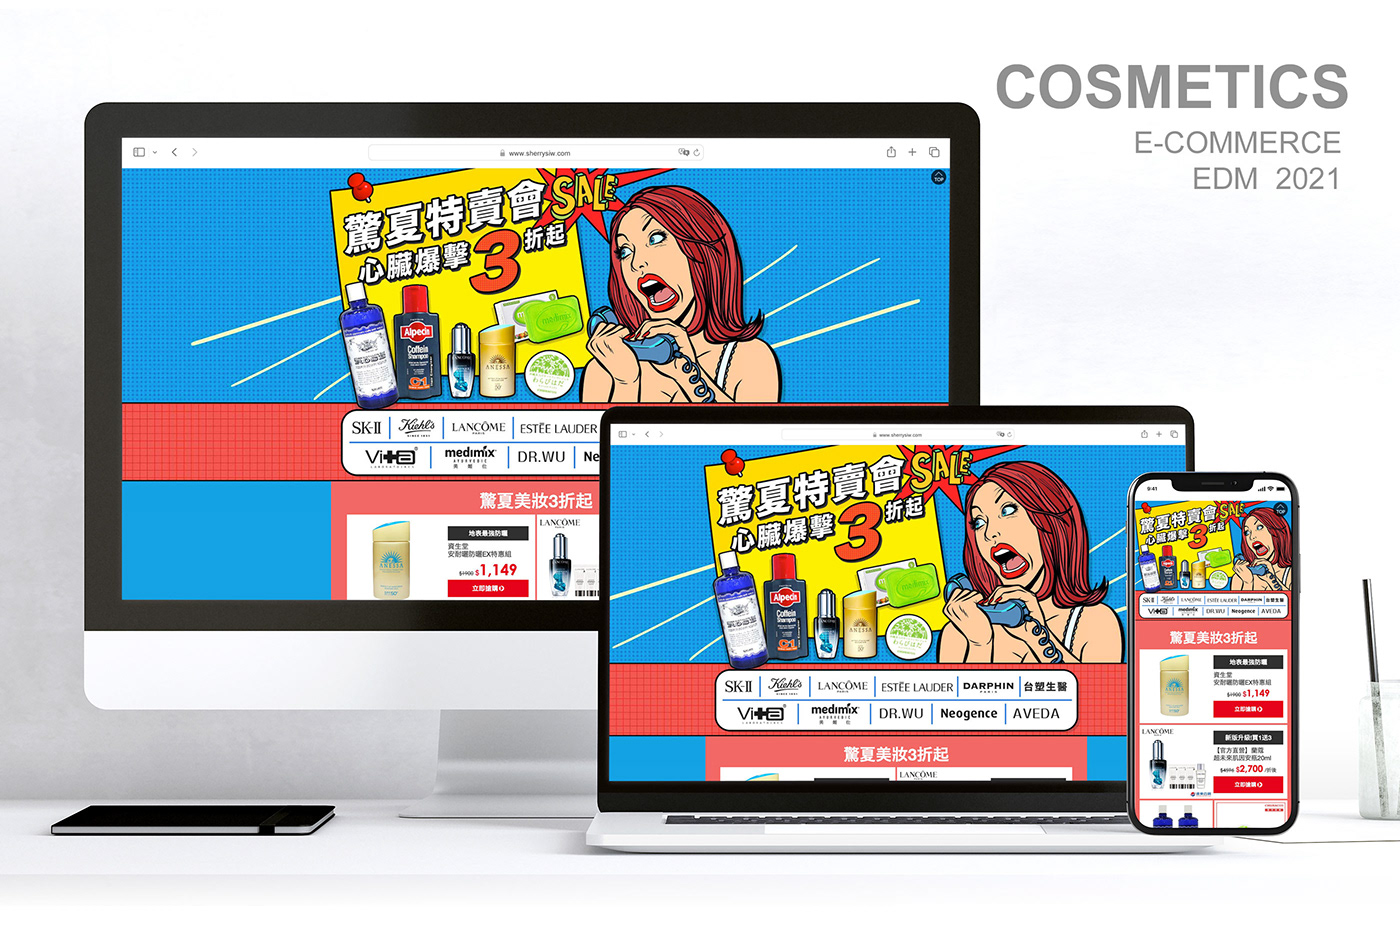 e-commerce Advertising  Edm Design landing page Web Design  visual design graphic design  branding  marketing   cosmetics